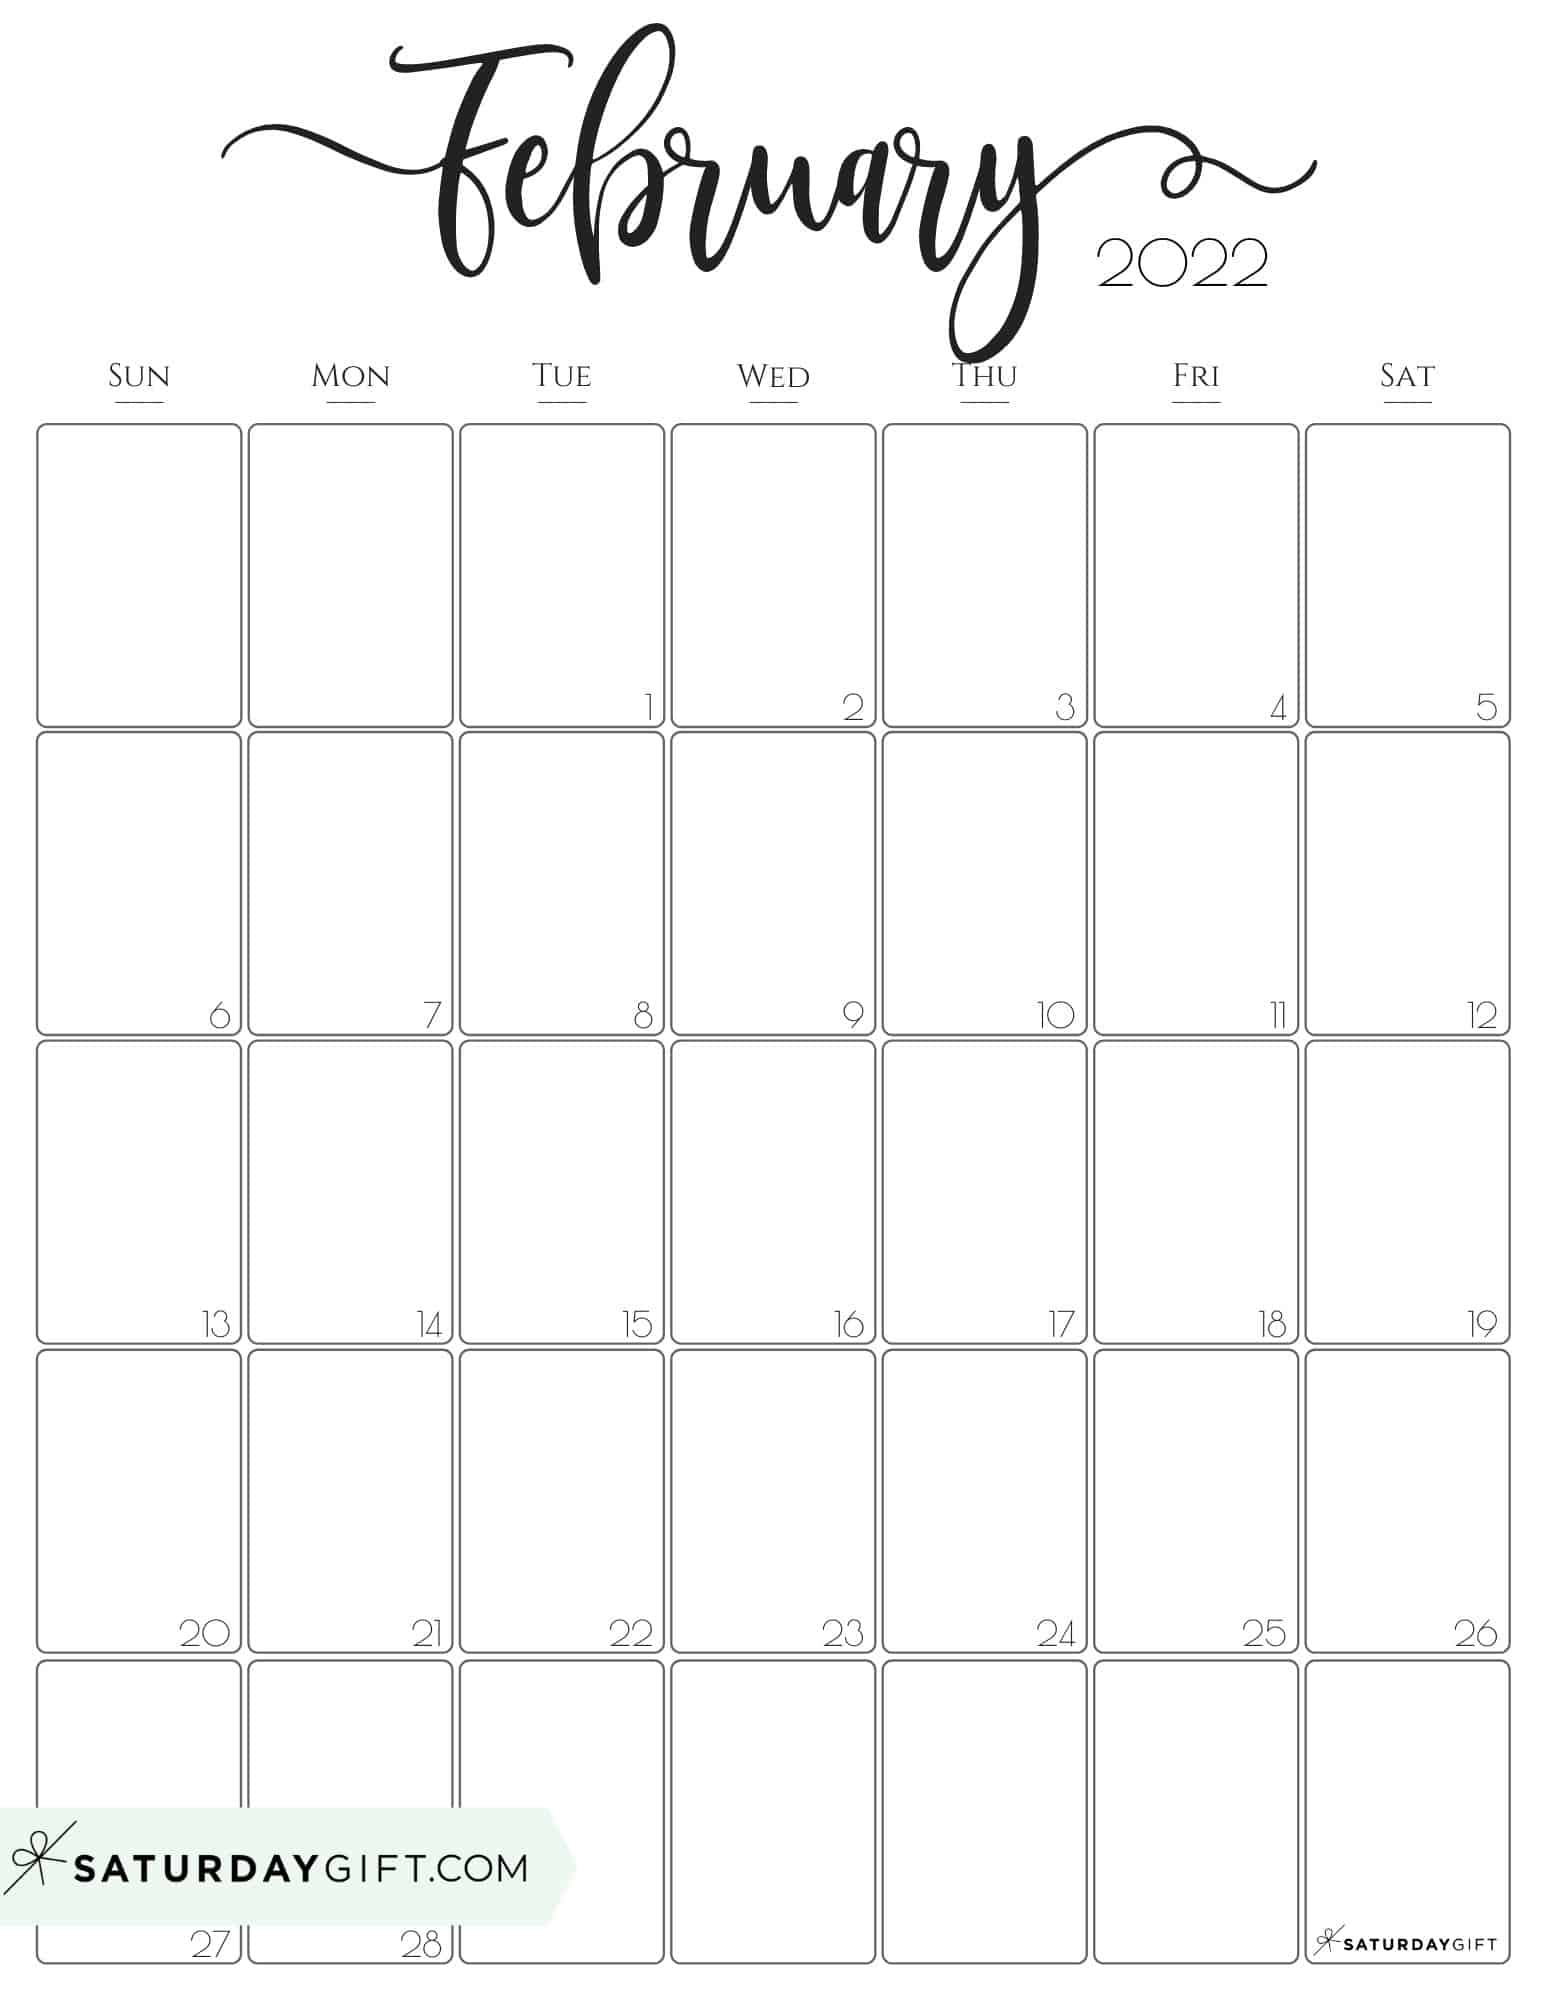 Pick February 9 2022 Calendar